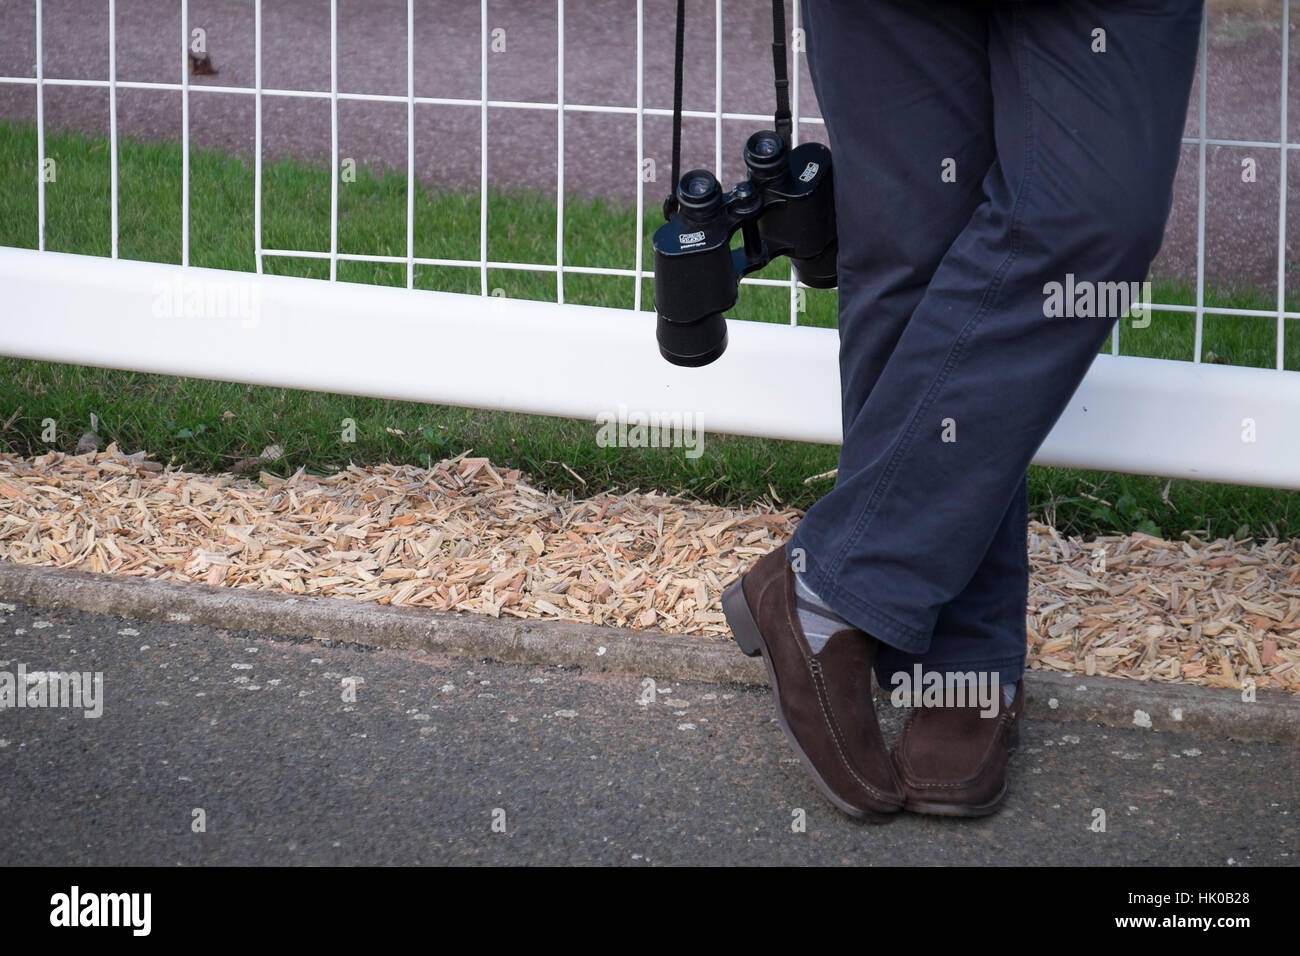 Racing: feet and binoculars Stock Photo